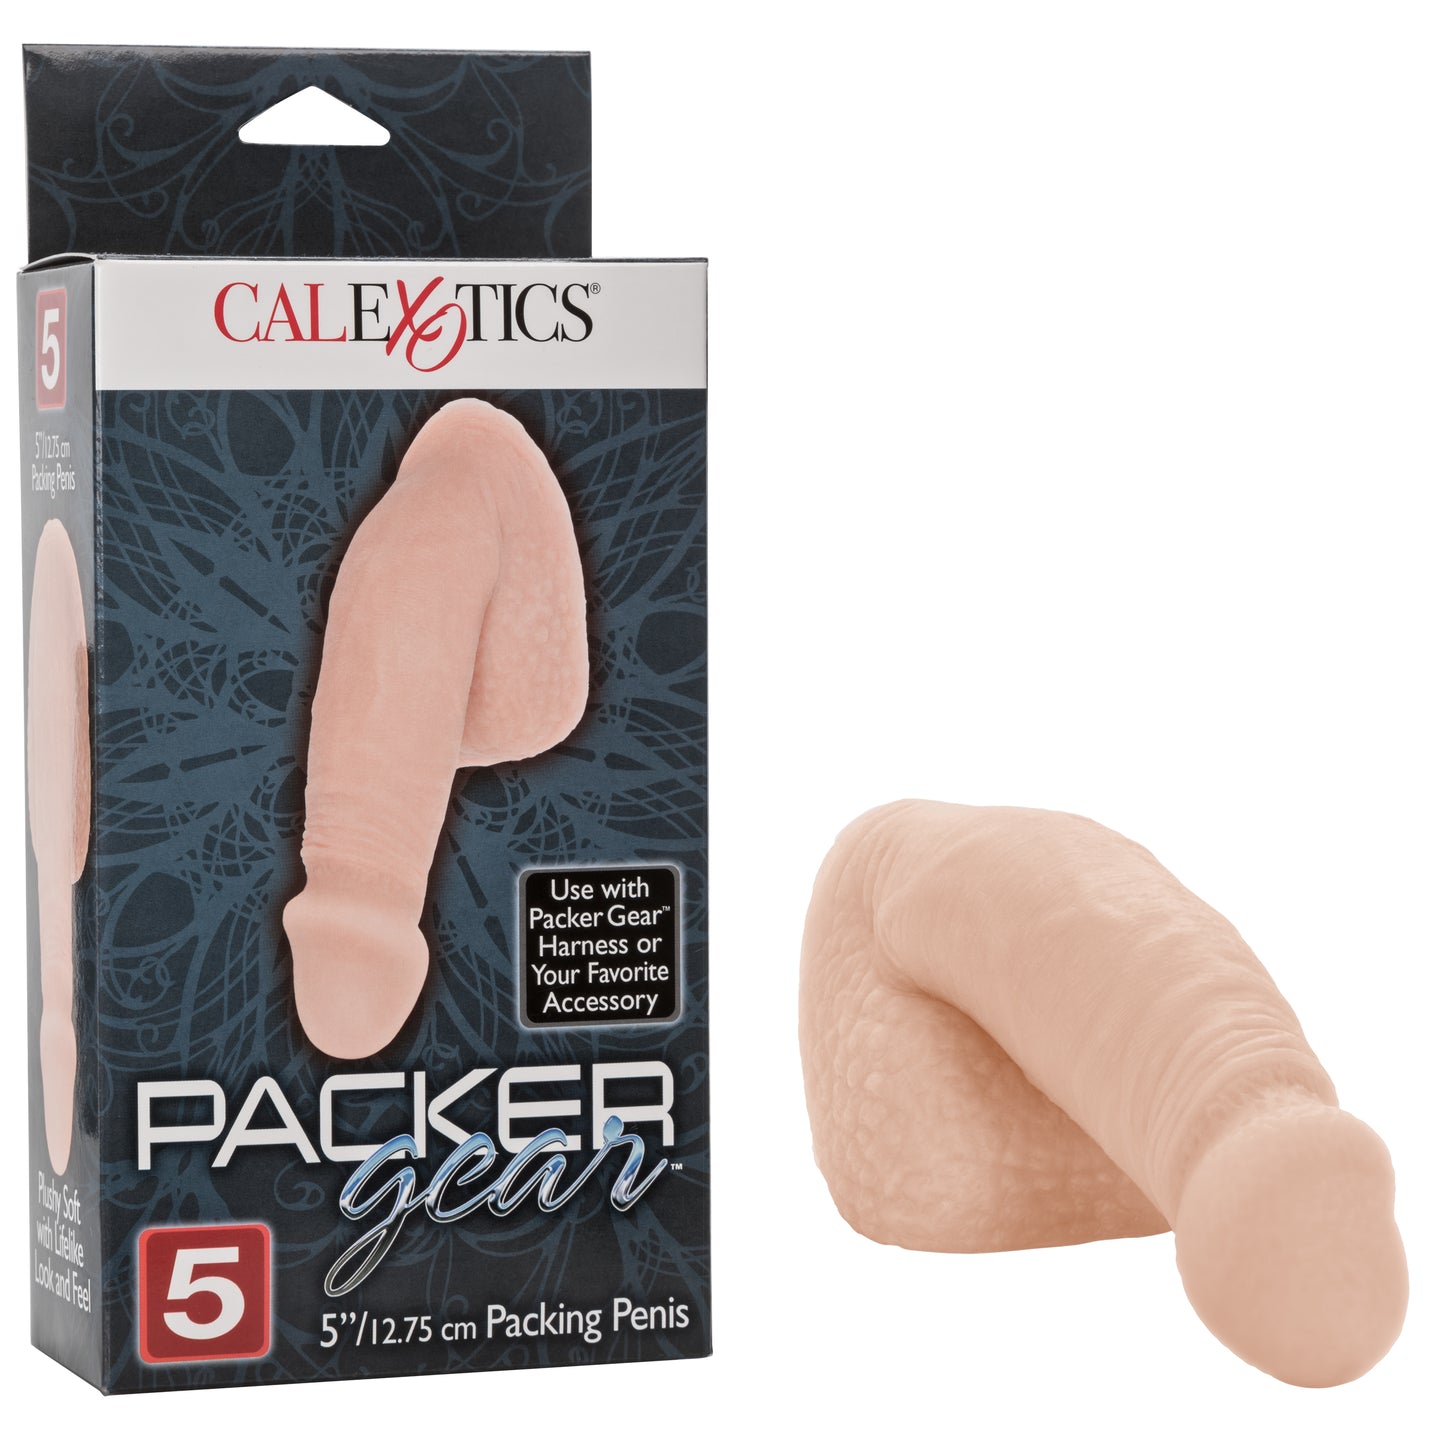 Packer Gear™ 5"/12.75 cm Packing Penis™